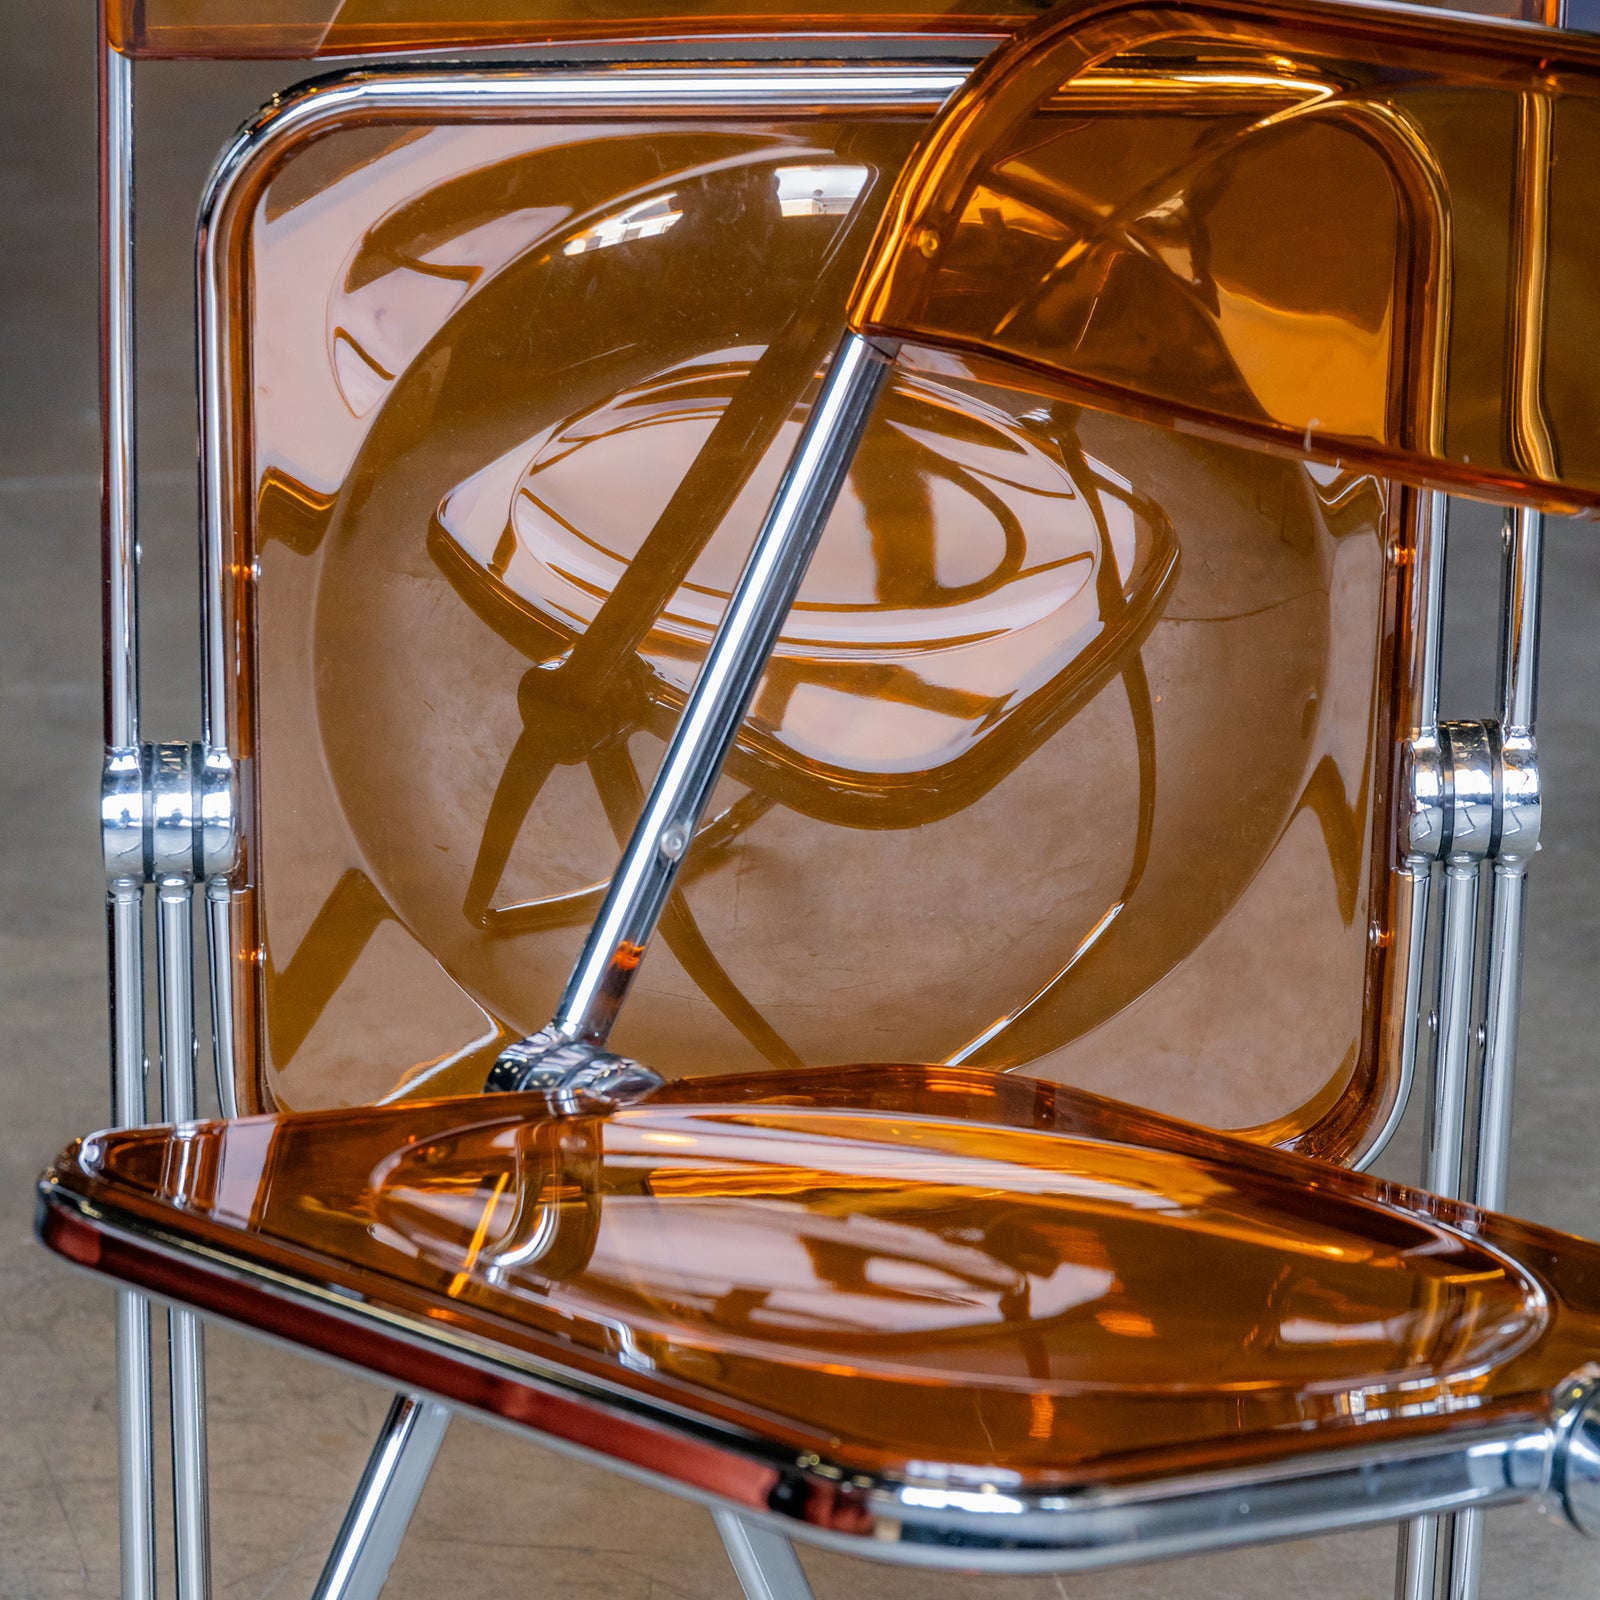 Pila Style Folding Chair